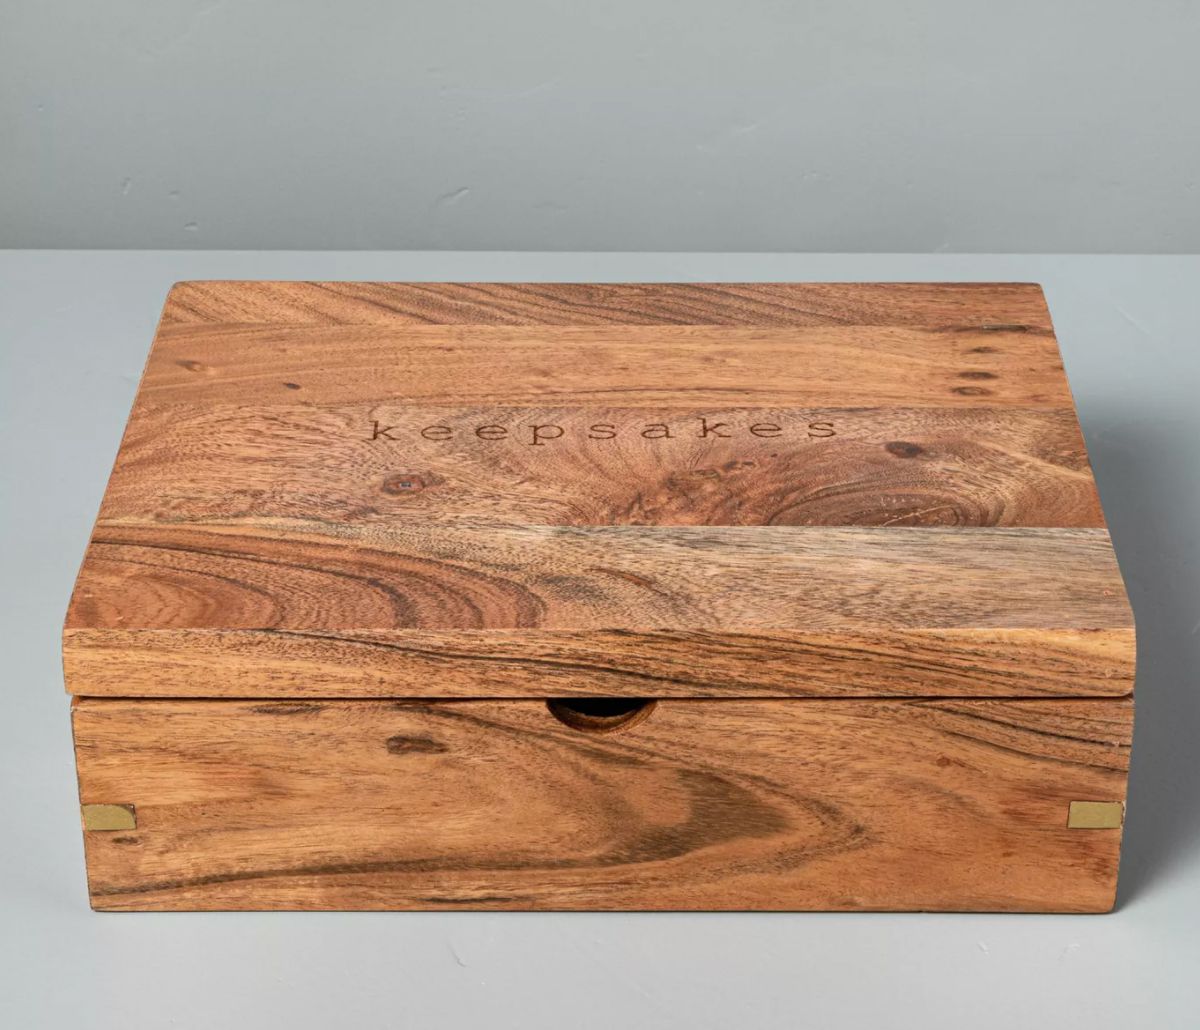 Hearth & Hand Wood 'Keepsakes' Box